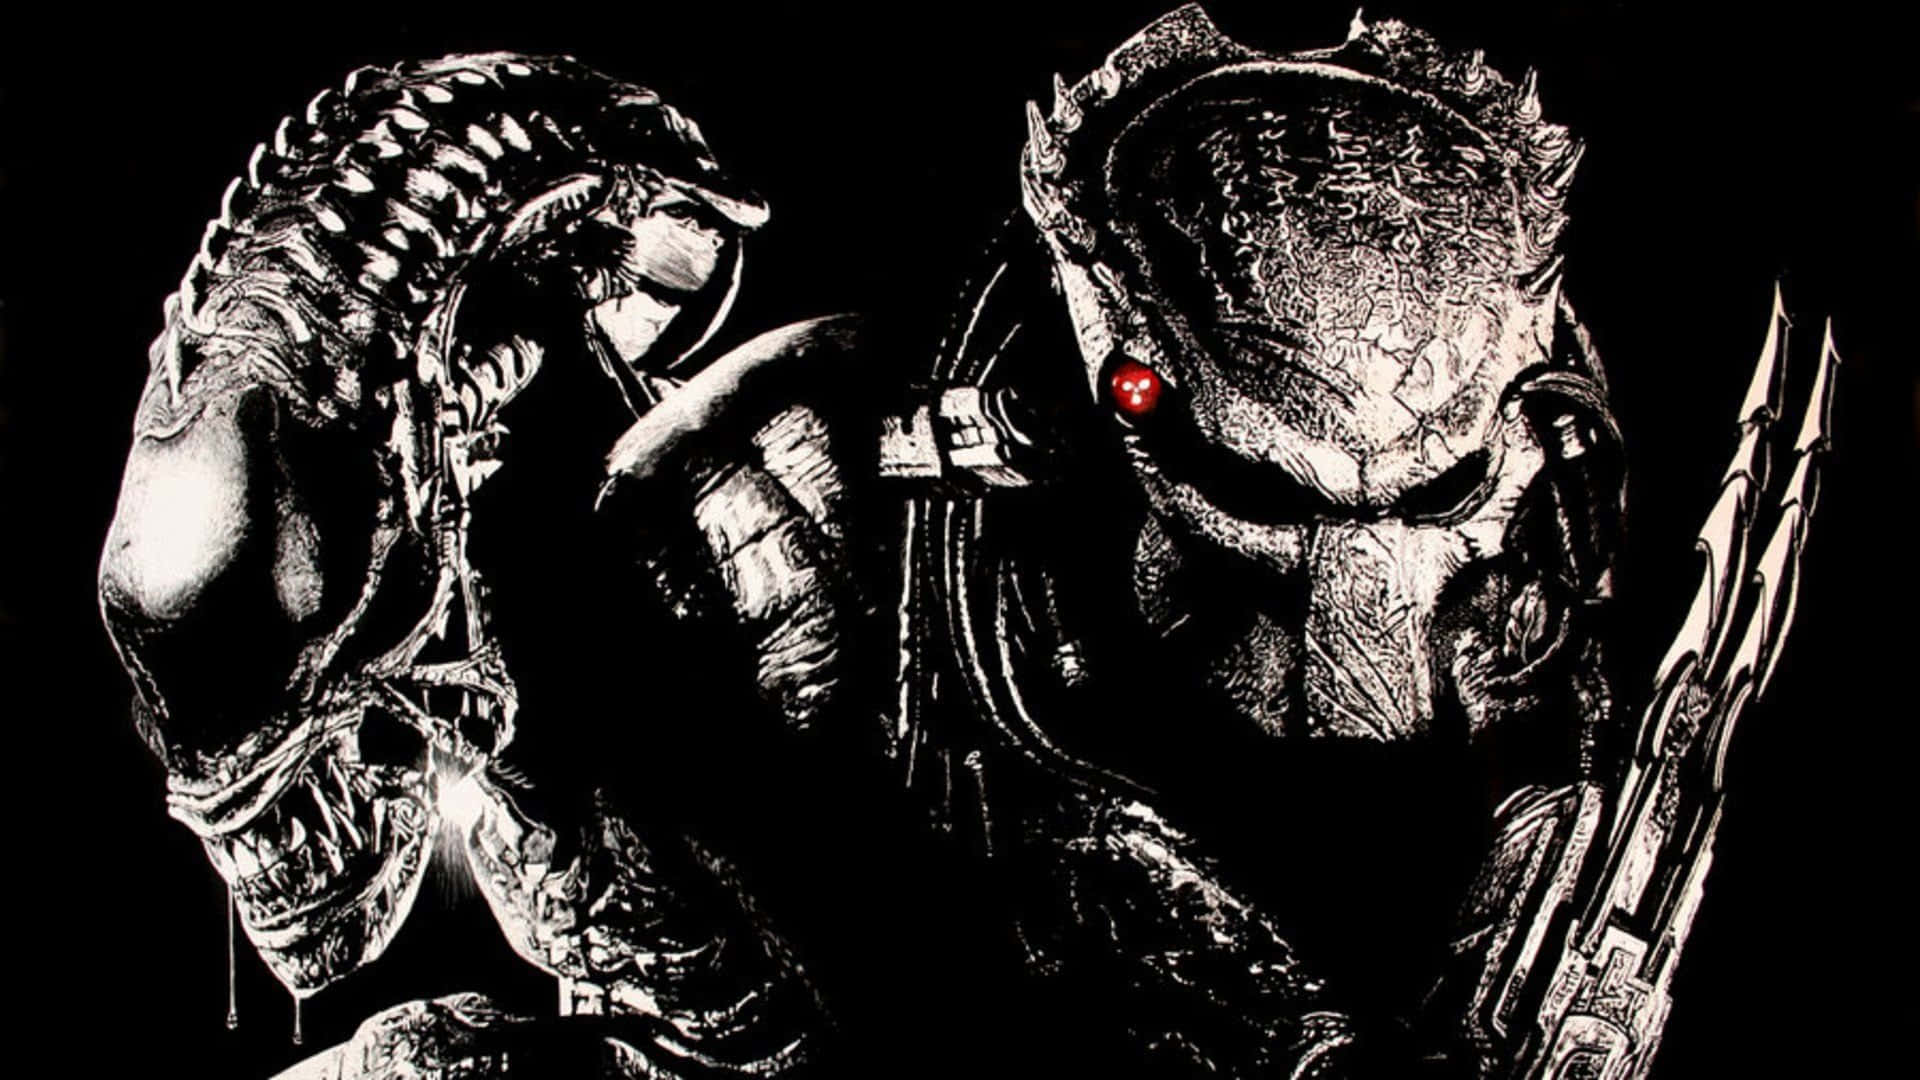 Alien Vs Predator Wallpaper, Science Fiction - Wallpaperforu